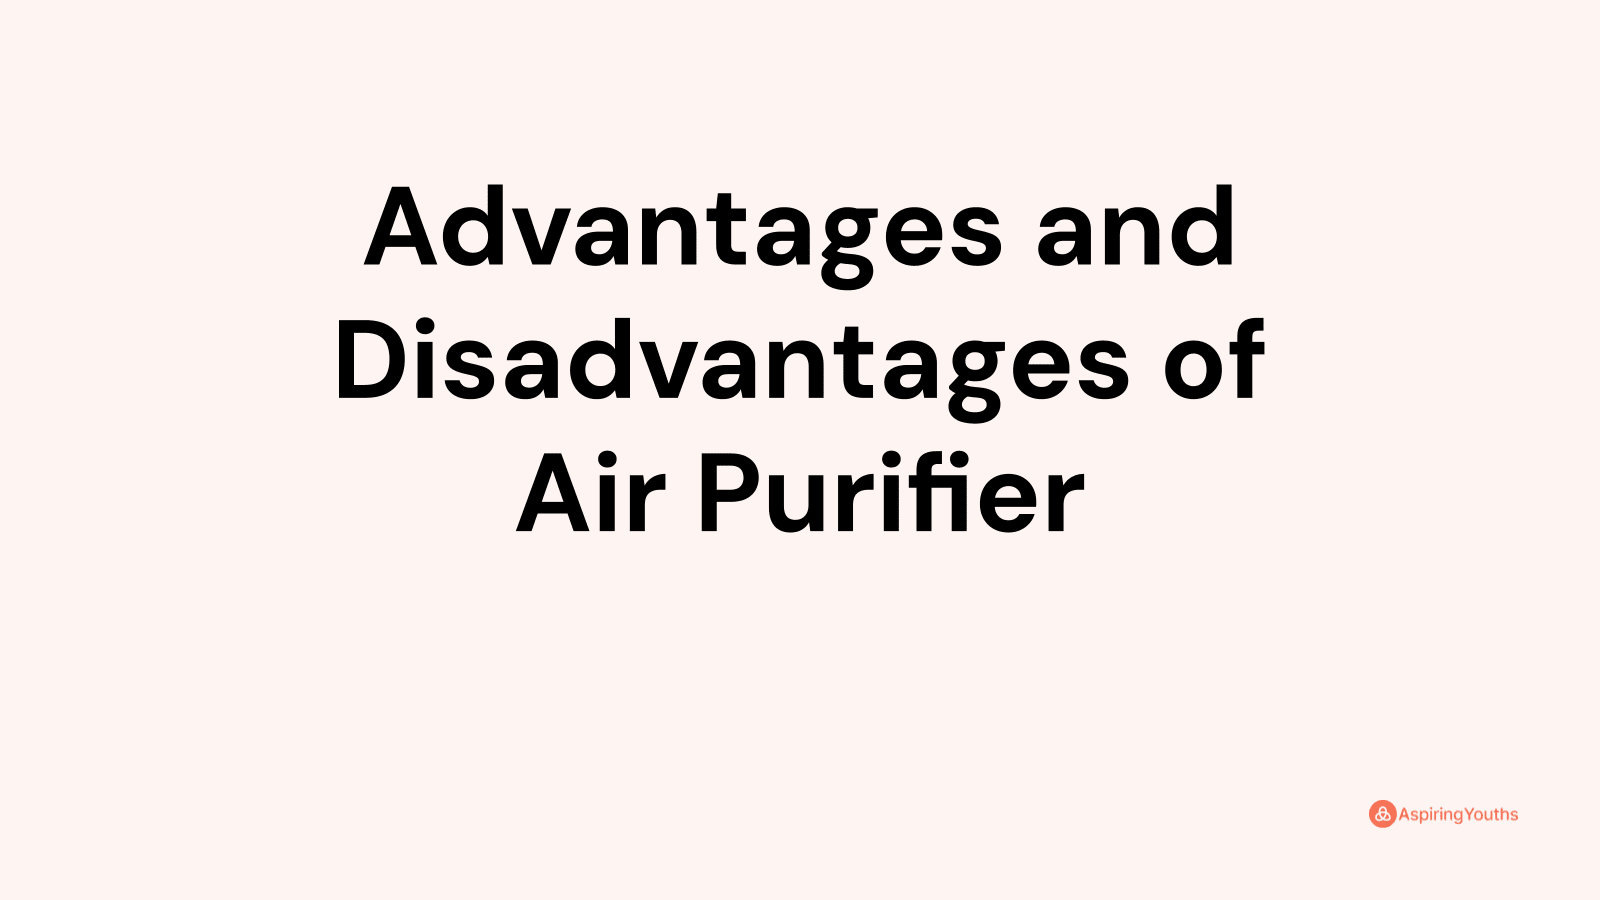 Advantages and disadvantages of Air Purifier